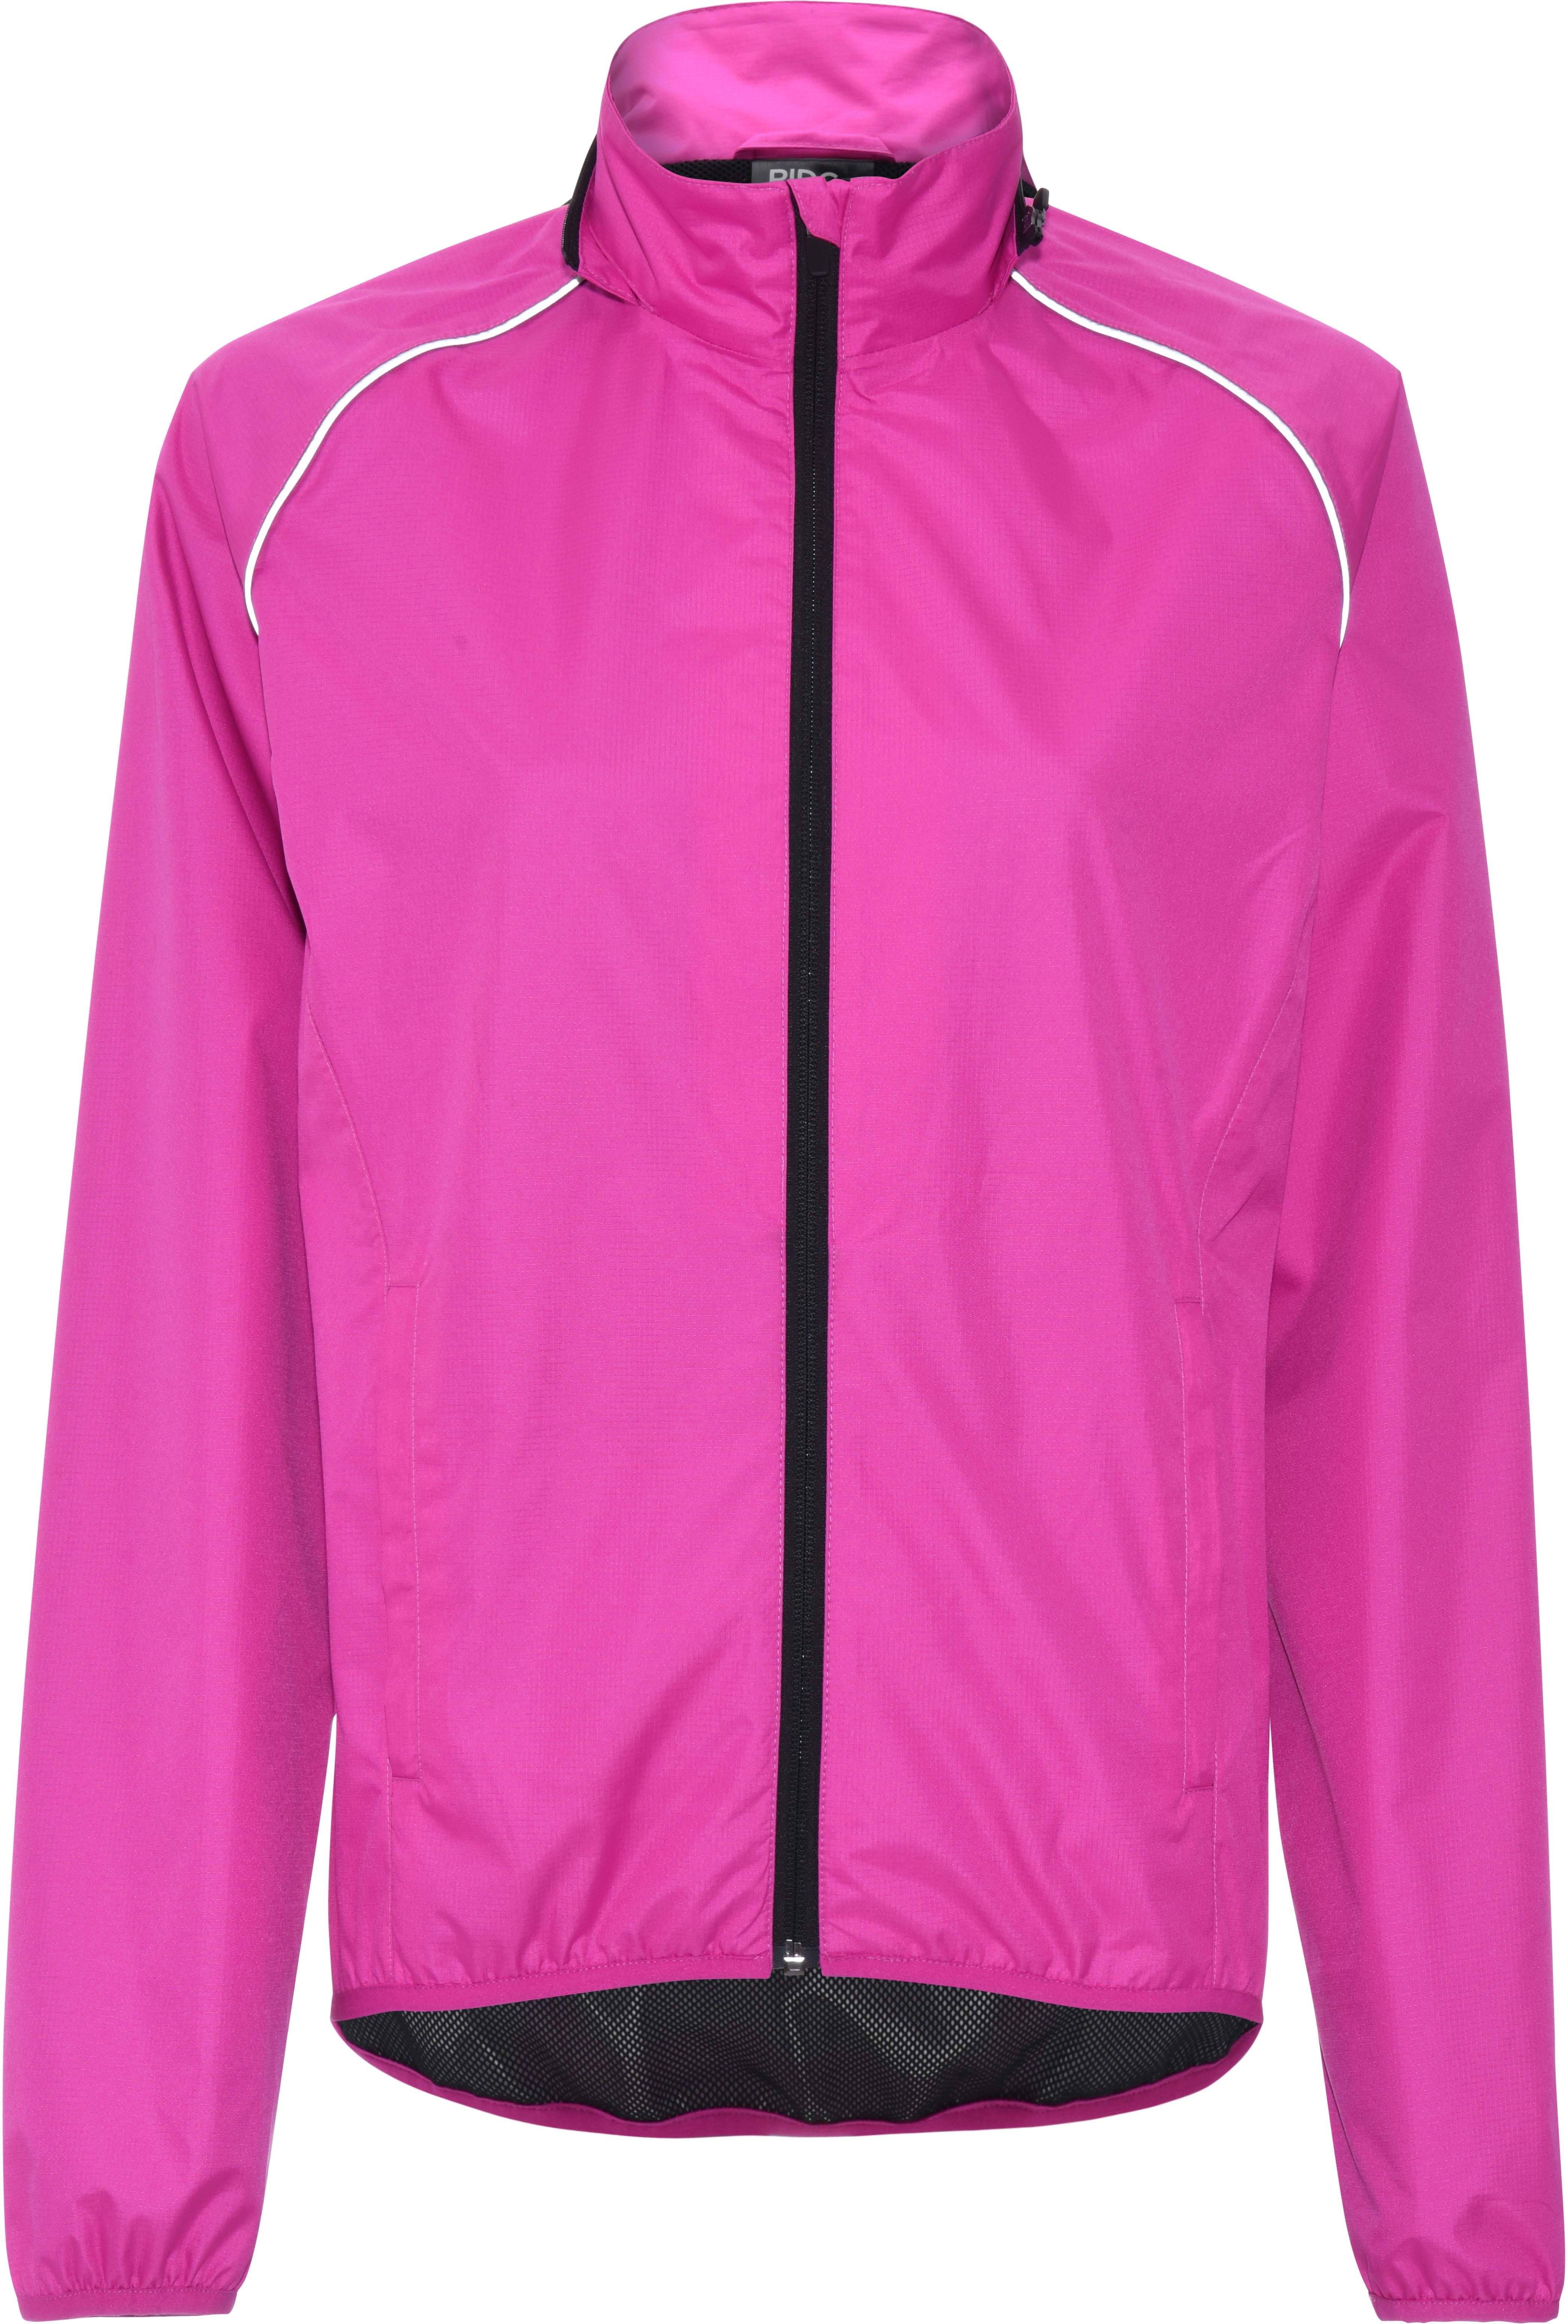 Ridge Womens Waterproof Jacket - Pink, 16